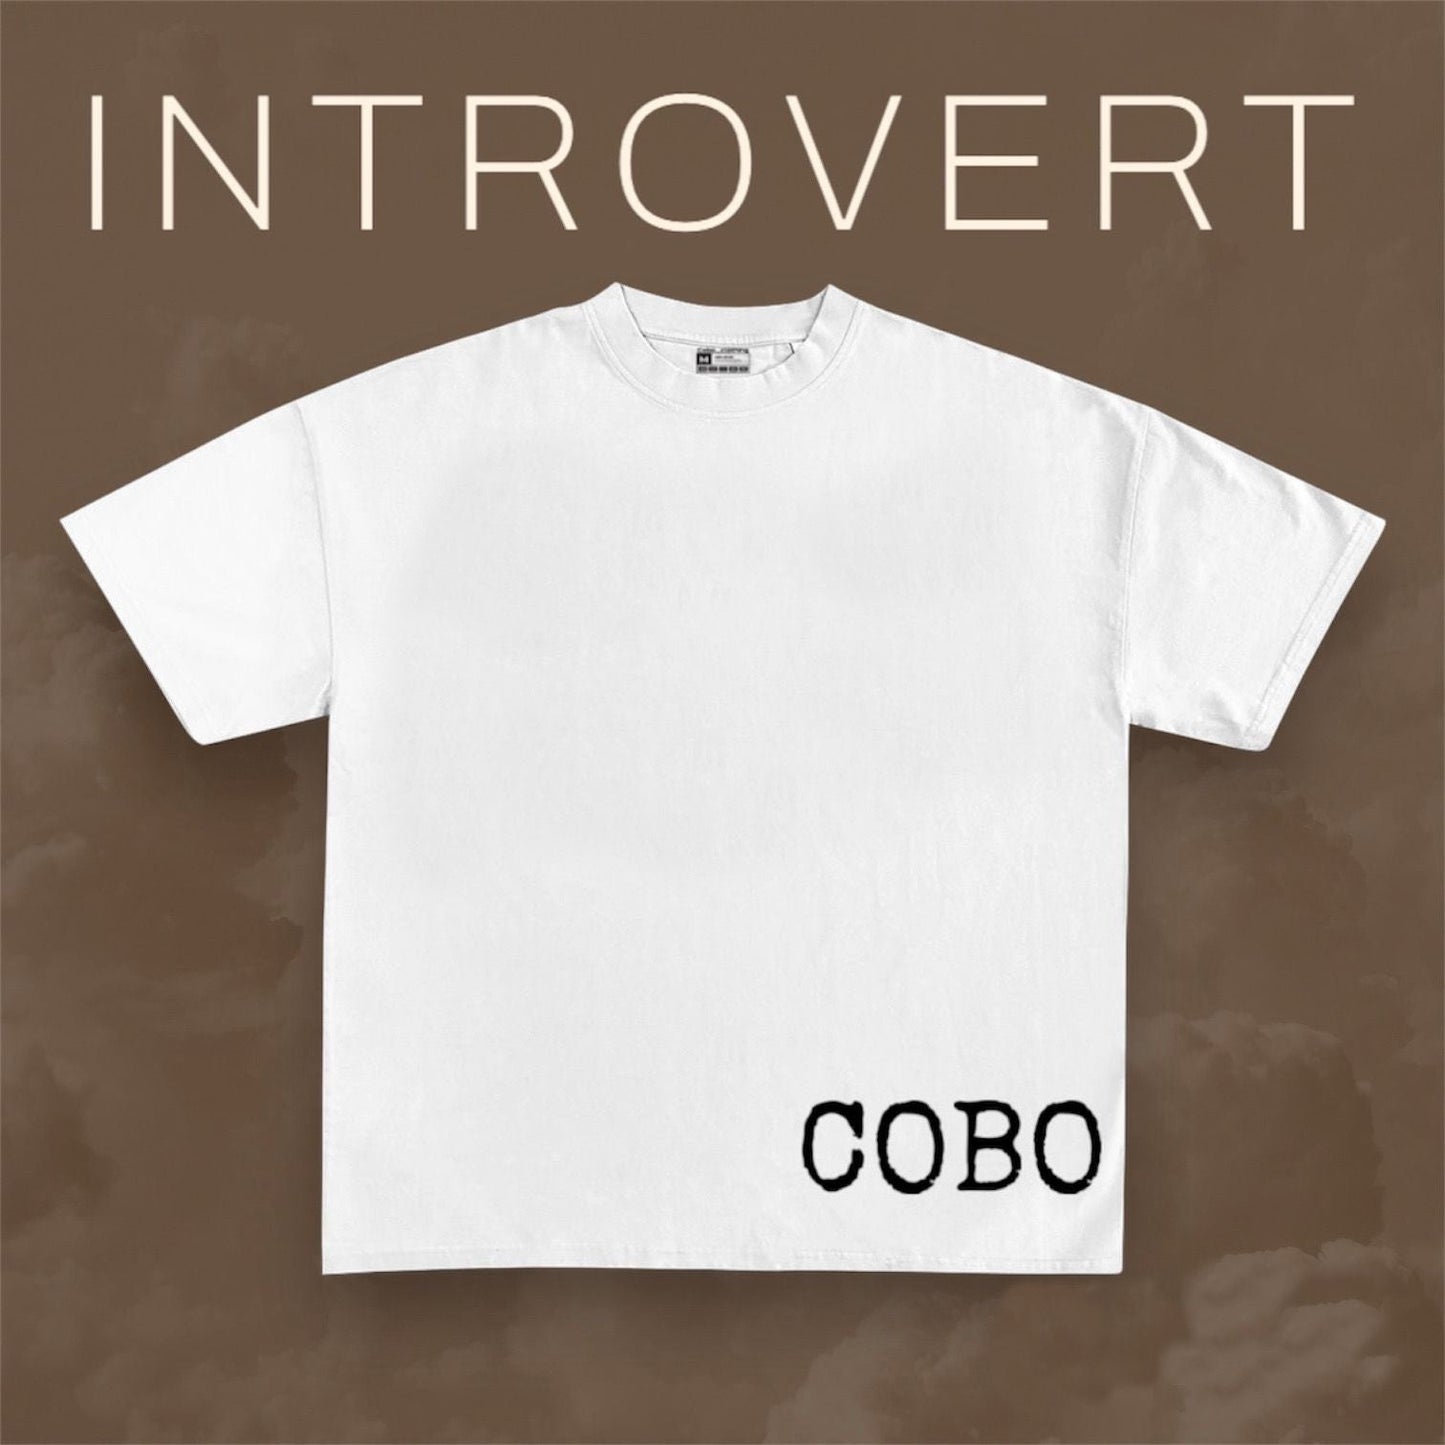 Social Introvert